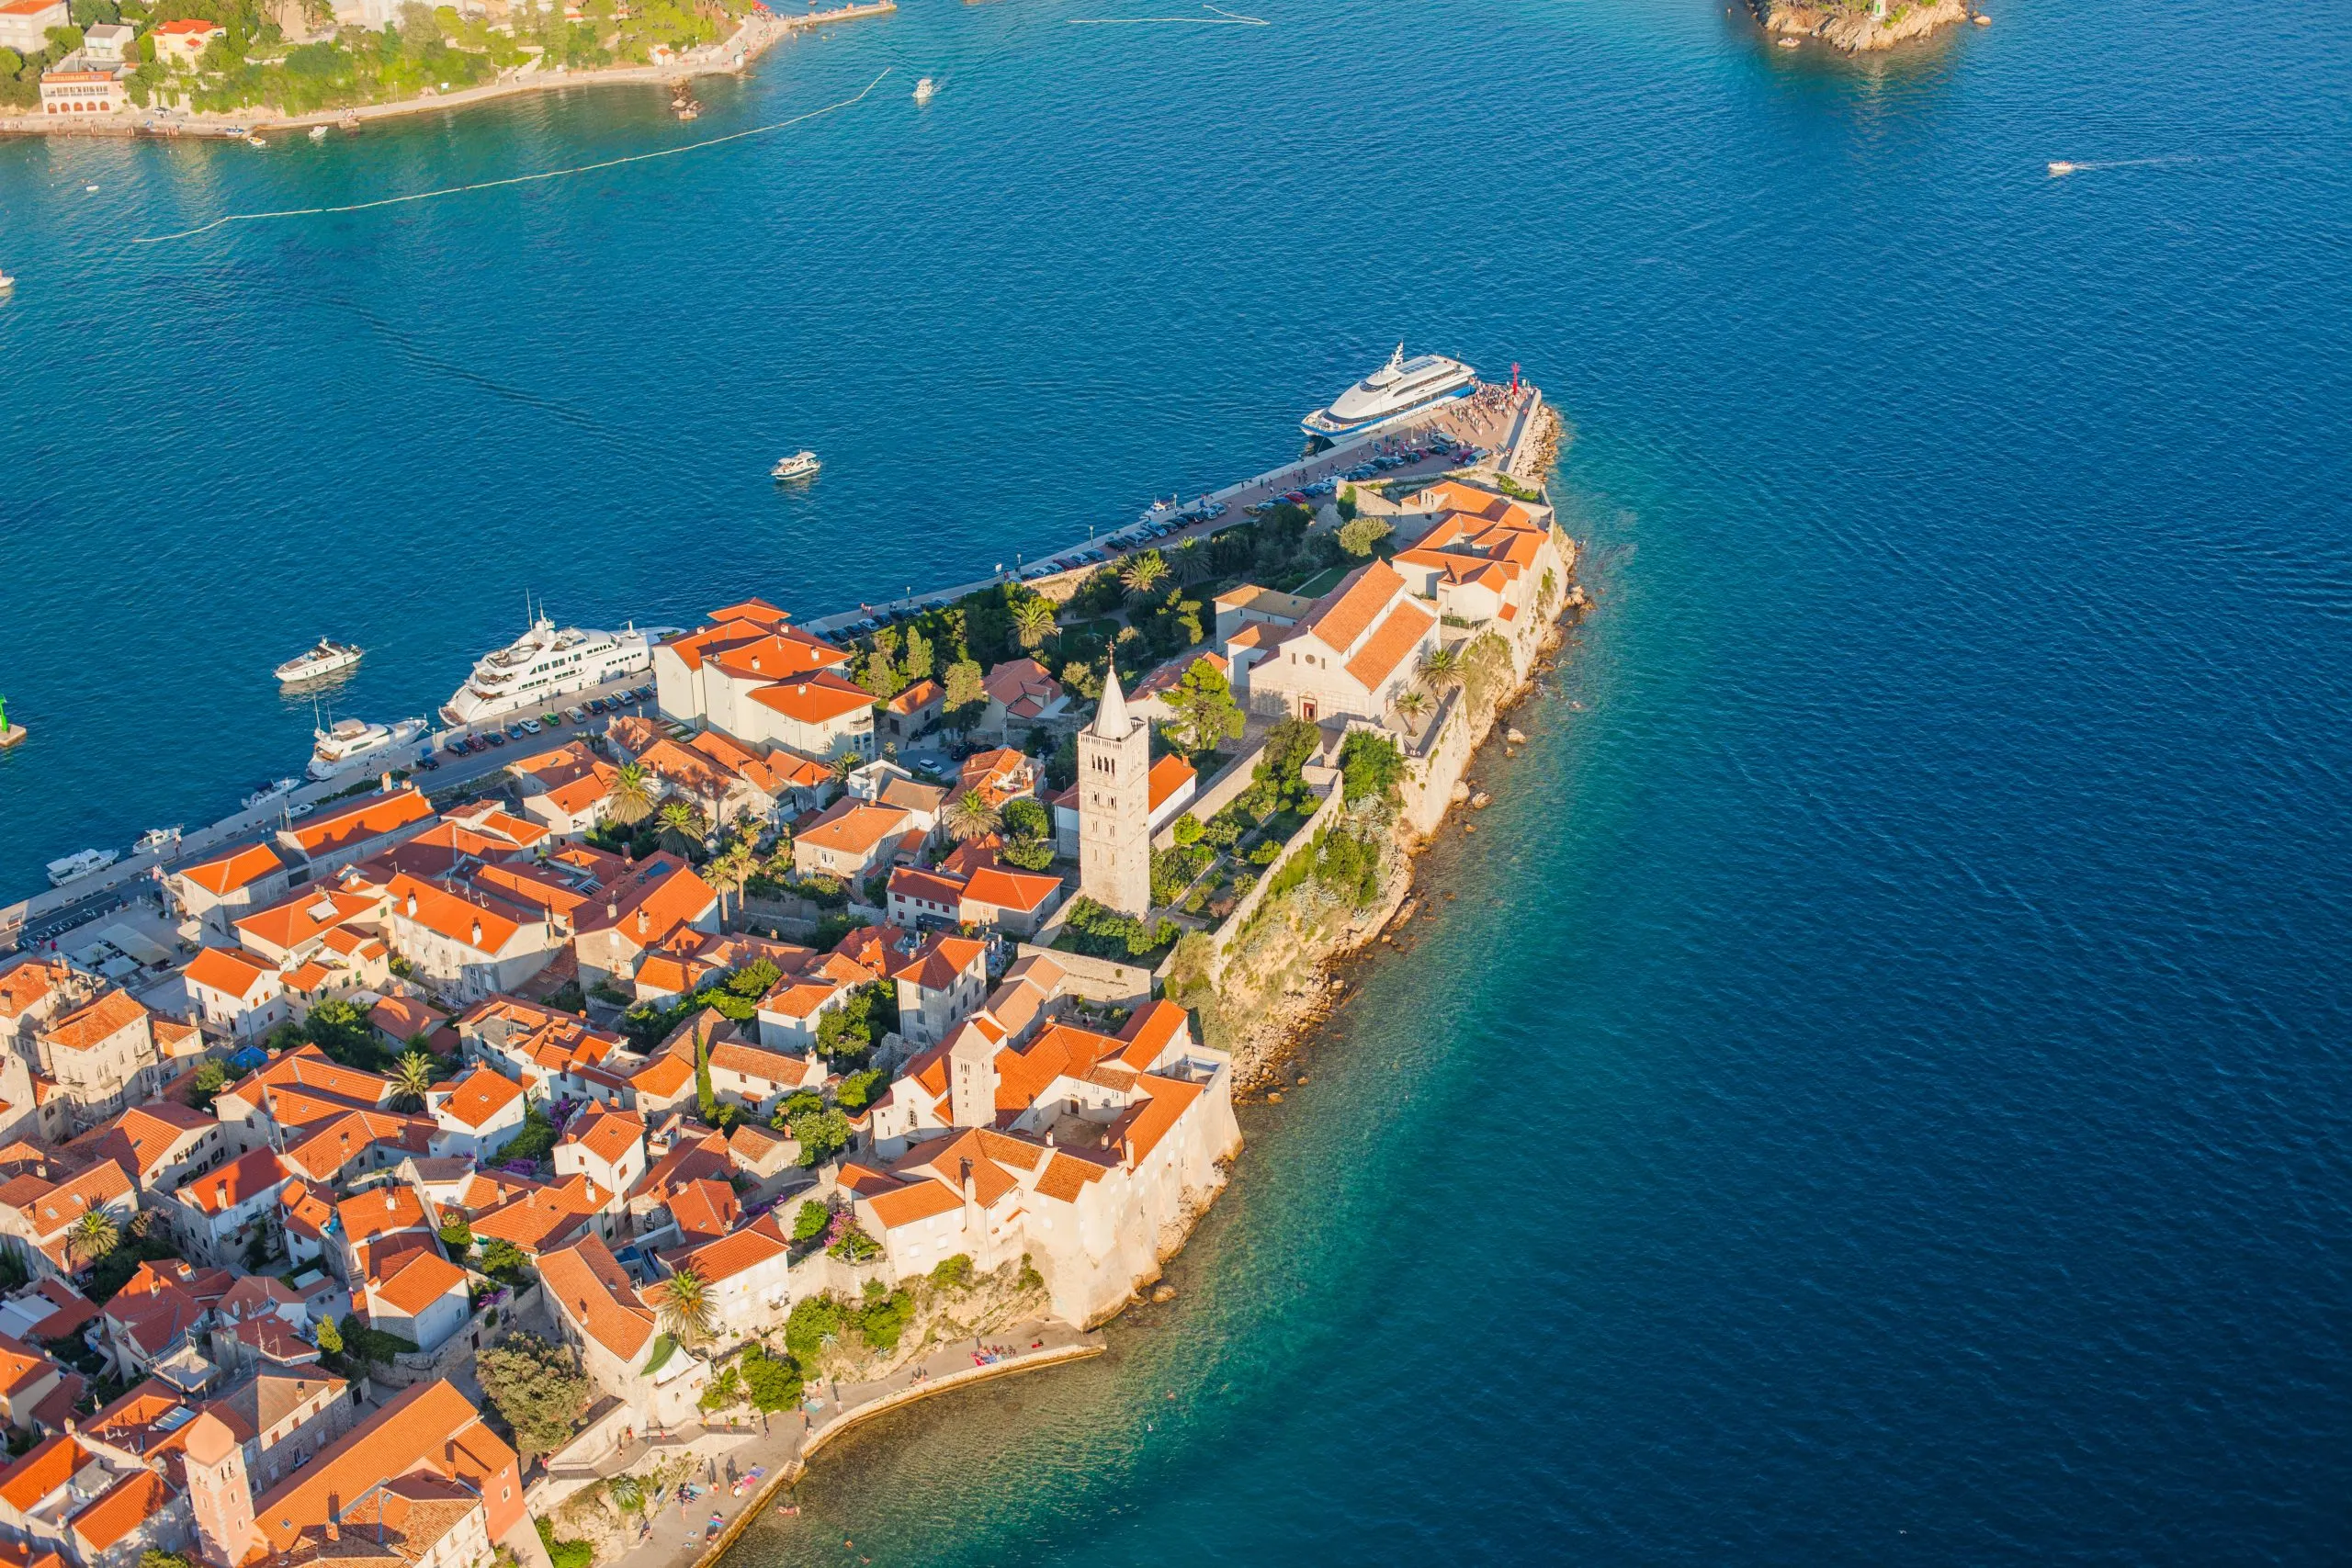 Luftfoto af Kroatiens kystlinje. Øen Rab